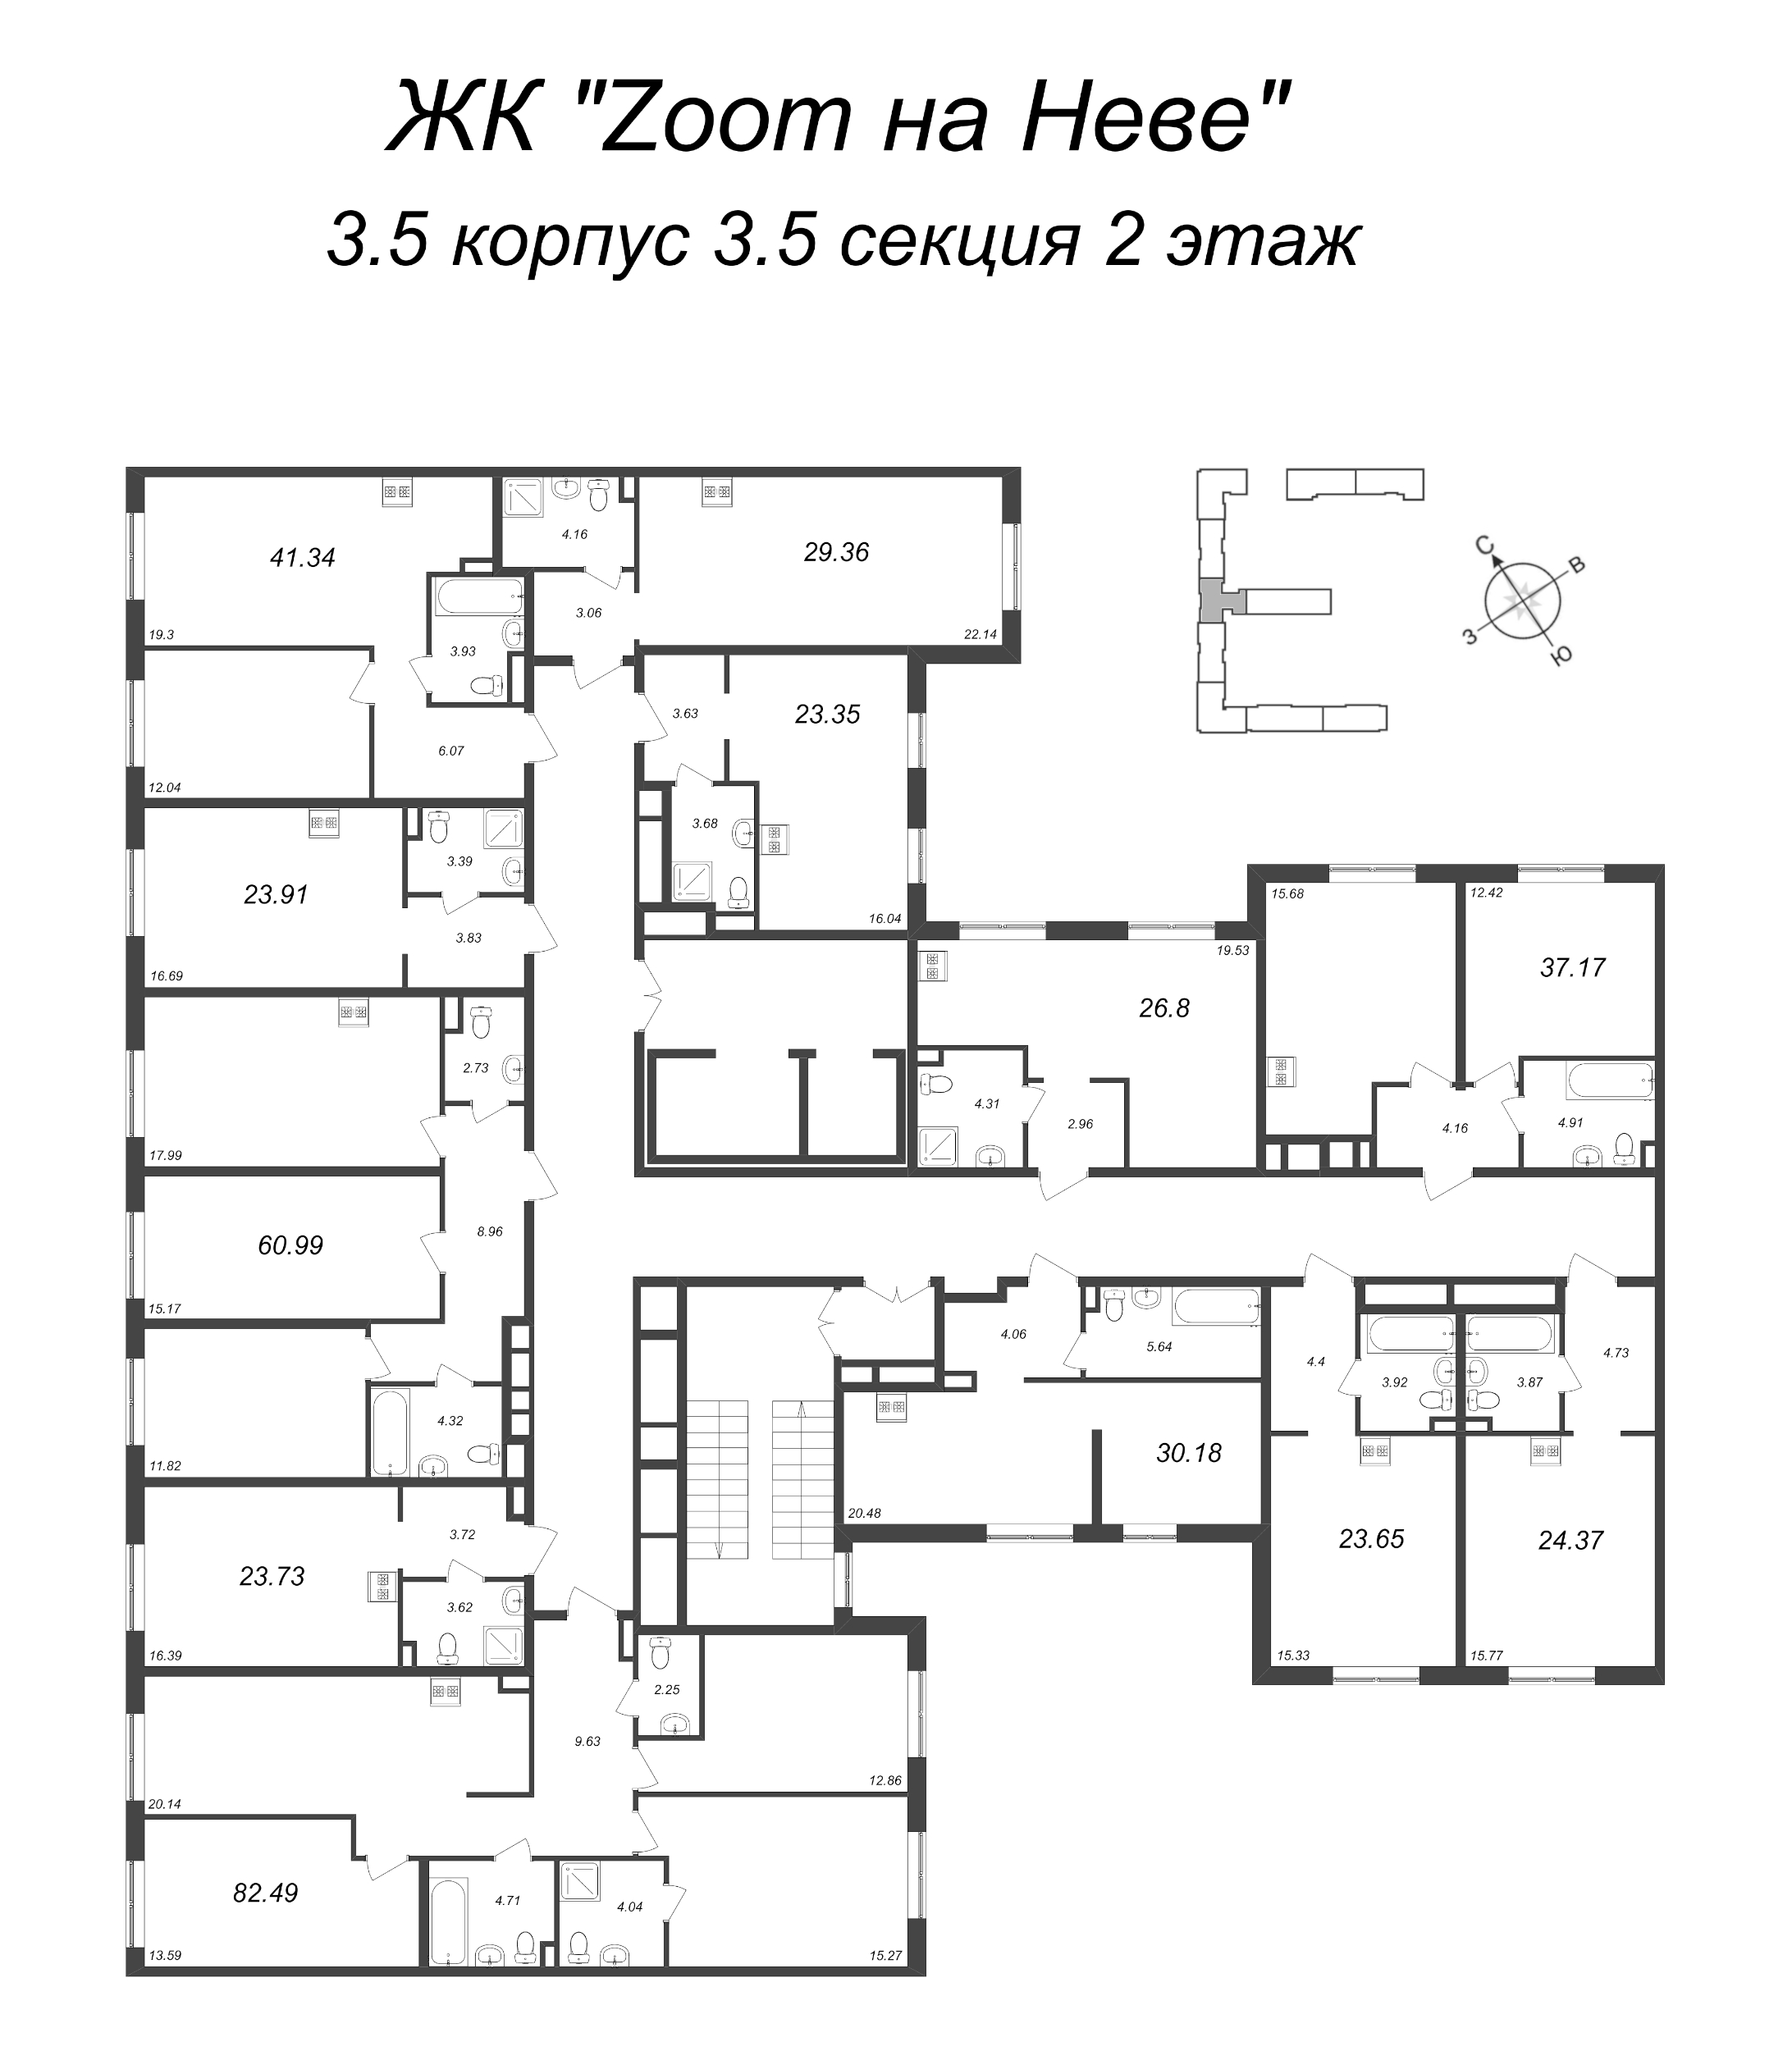 2-комнатная (Евро) квартира, 41.51 м² в ЖК "Zoom на Неве" - планировка этажа